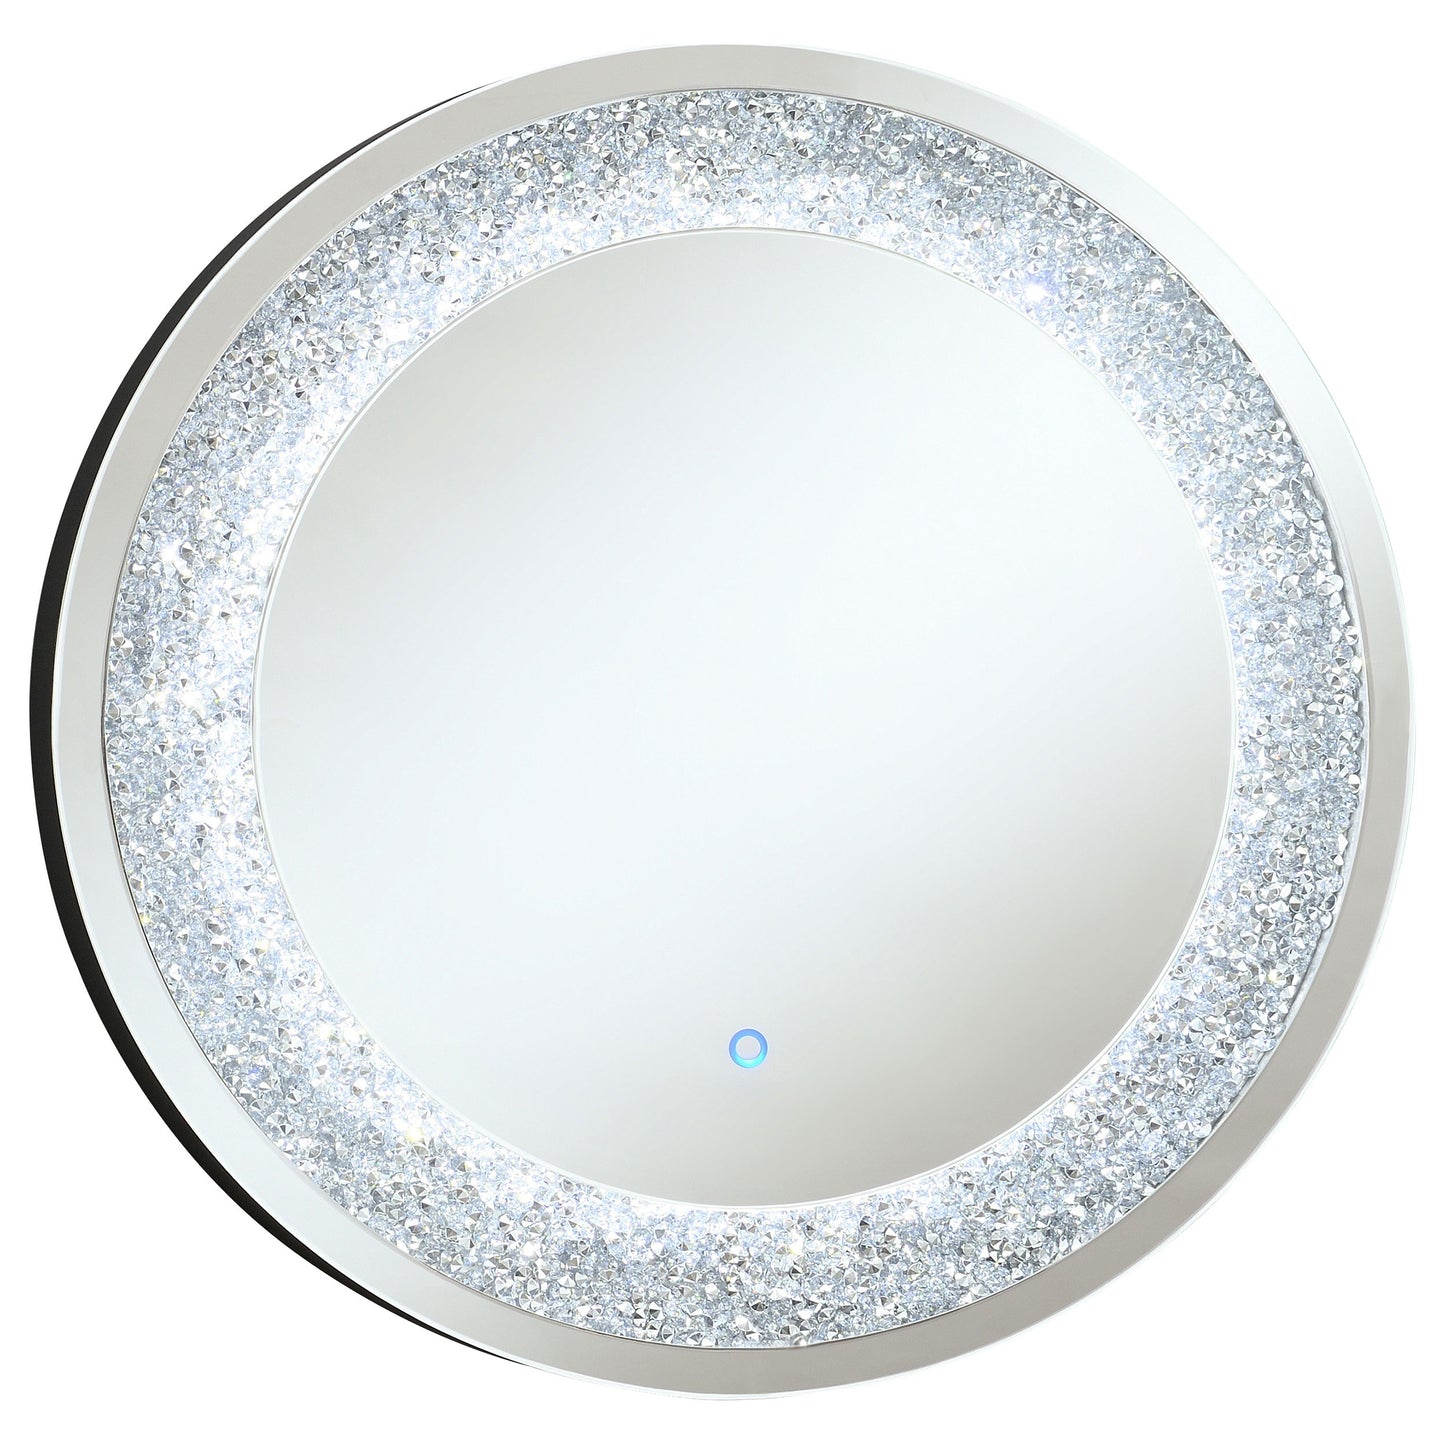 Landar Round Wall Mirror Silver